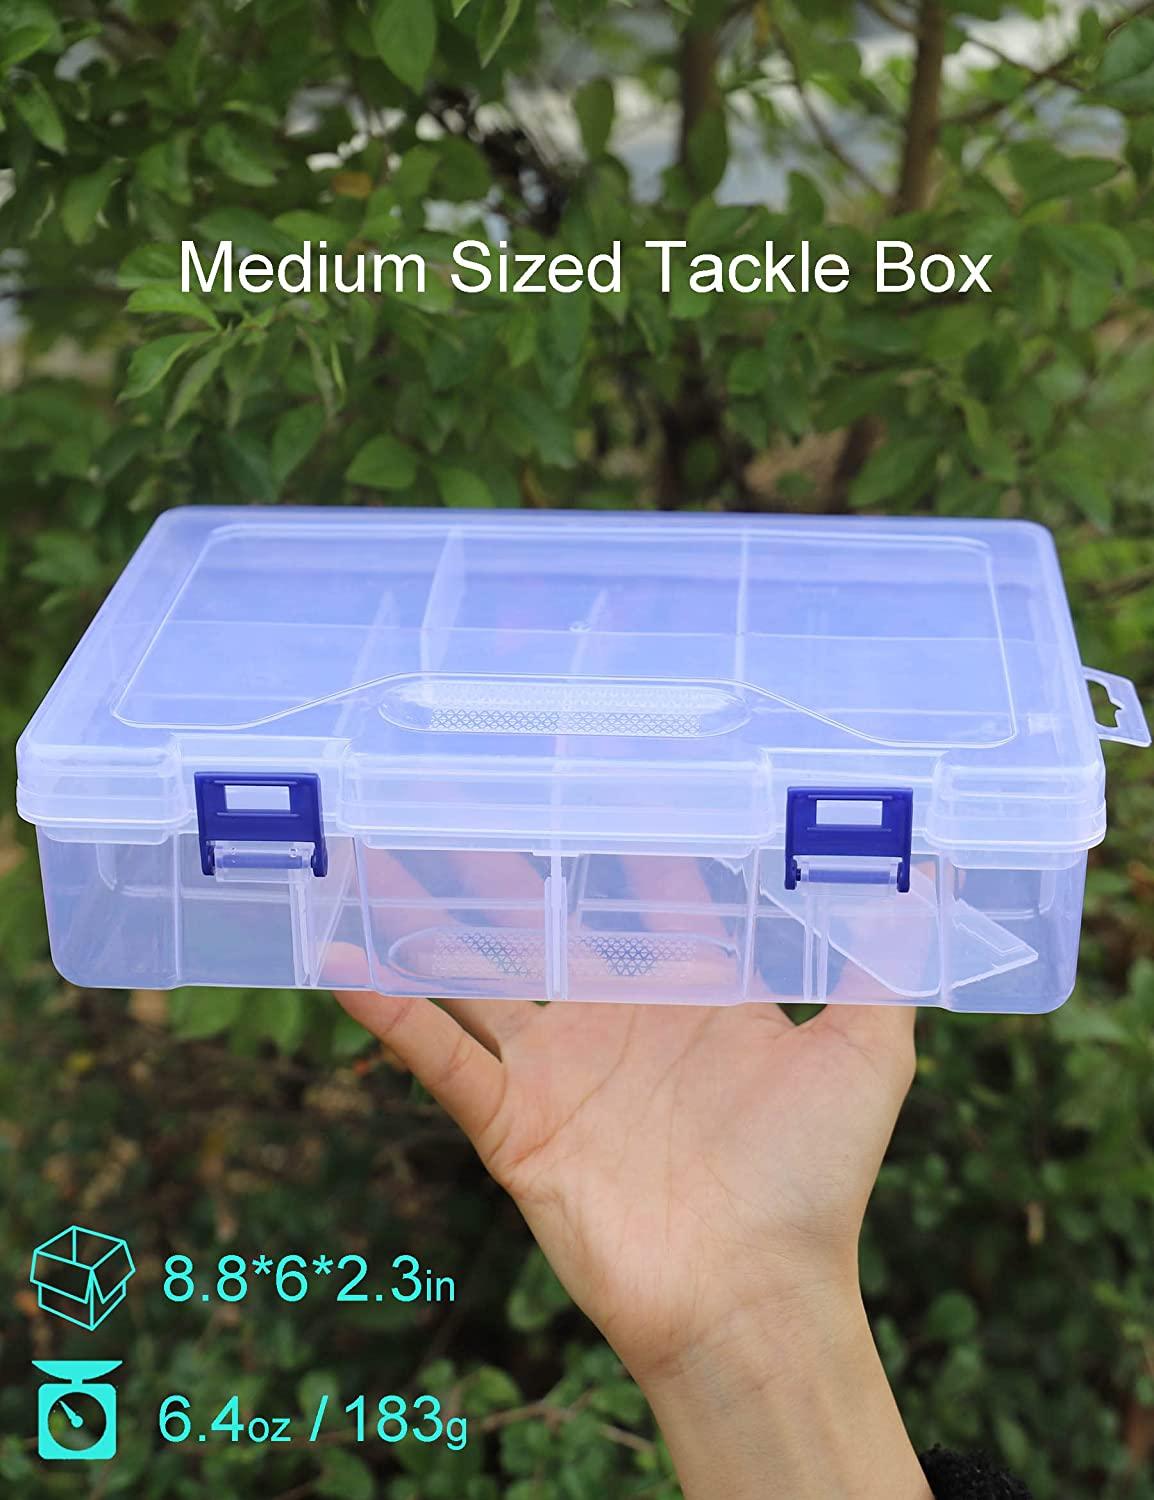  Avlcoaky Tackle Box Large 3 Layers Plastic Portable